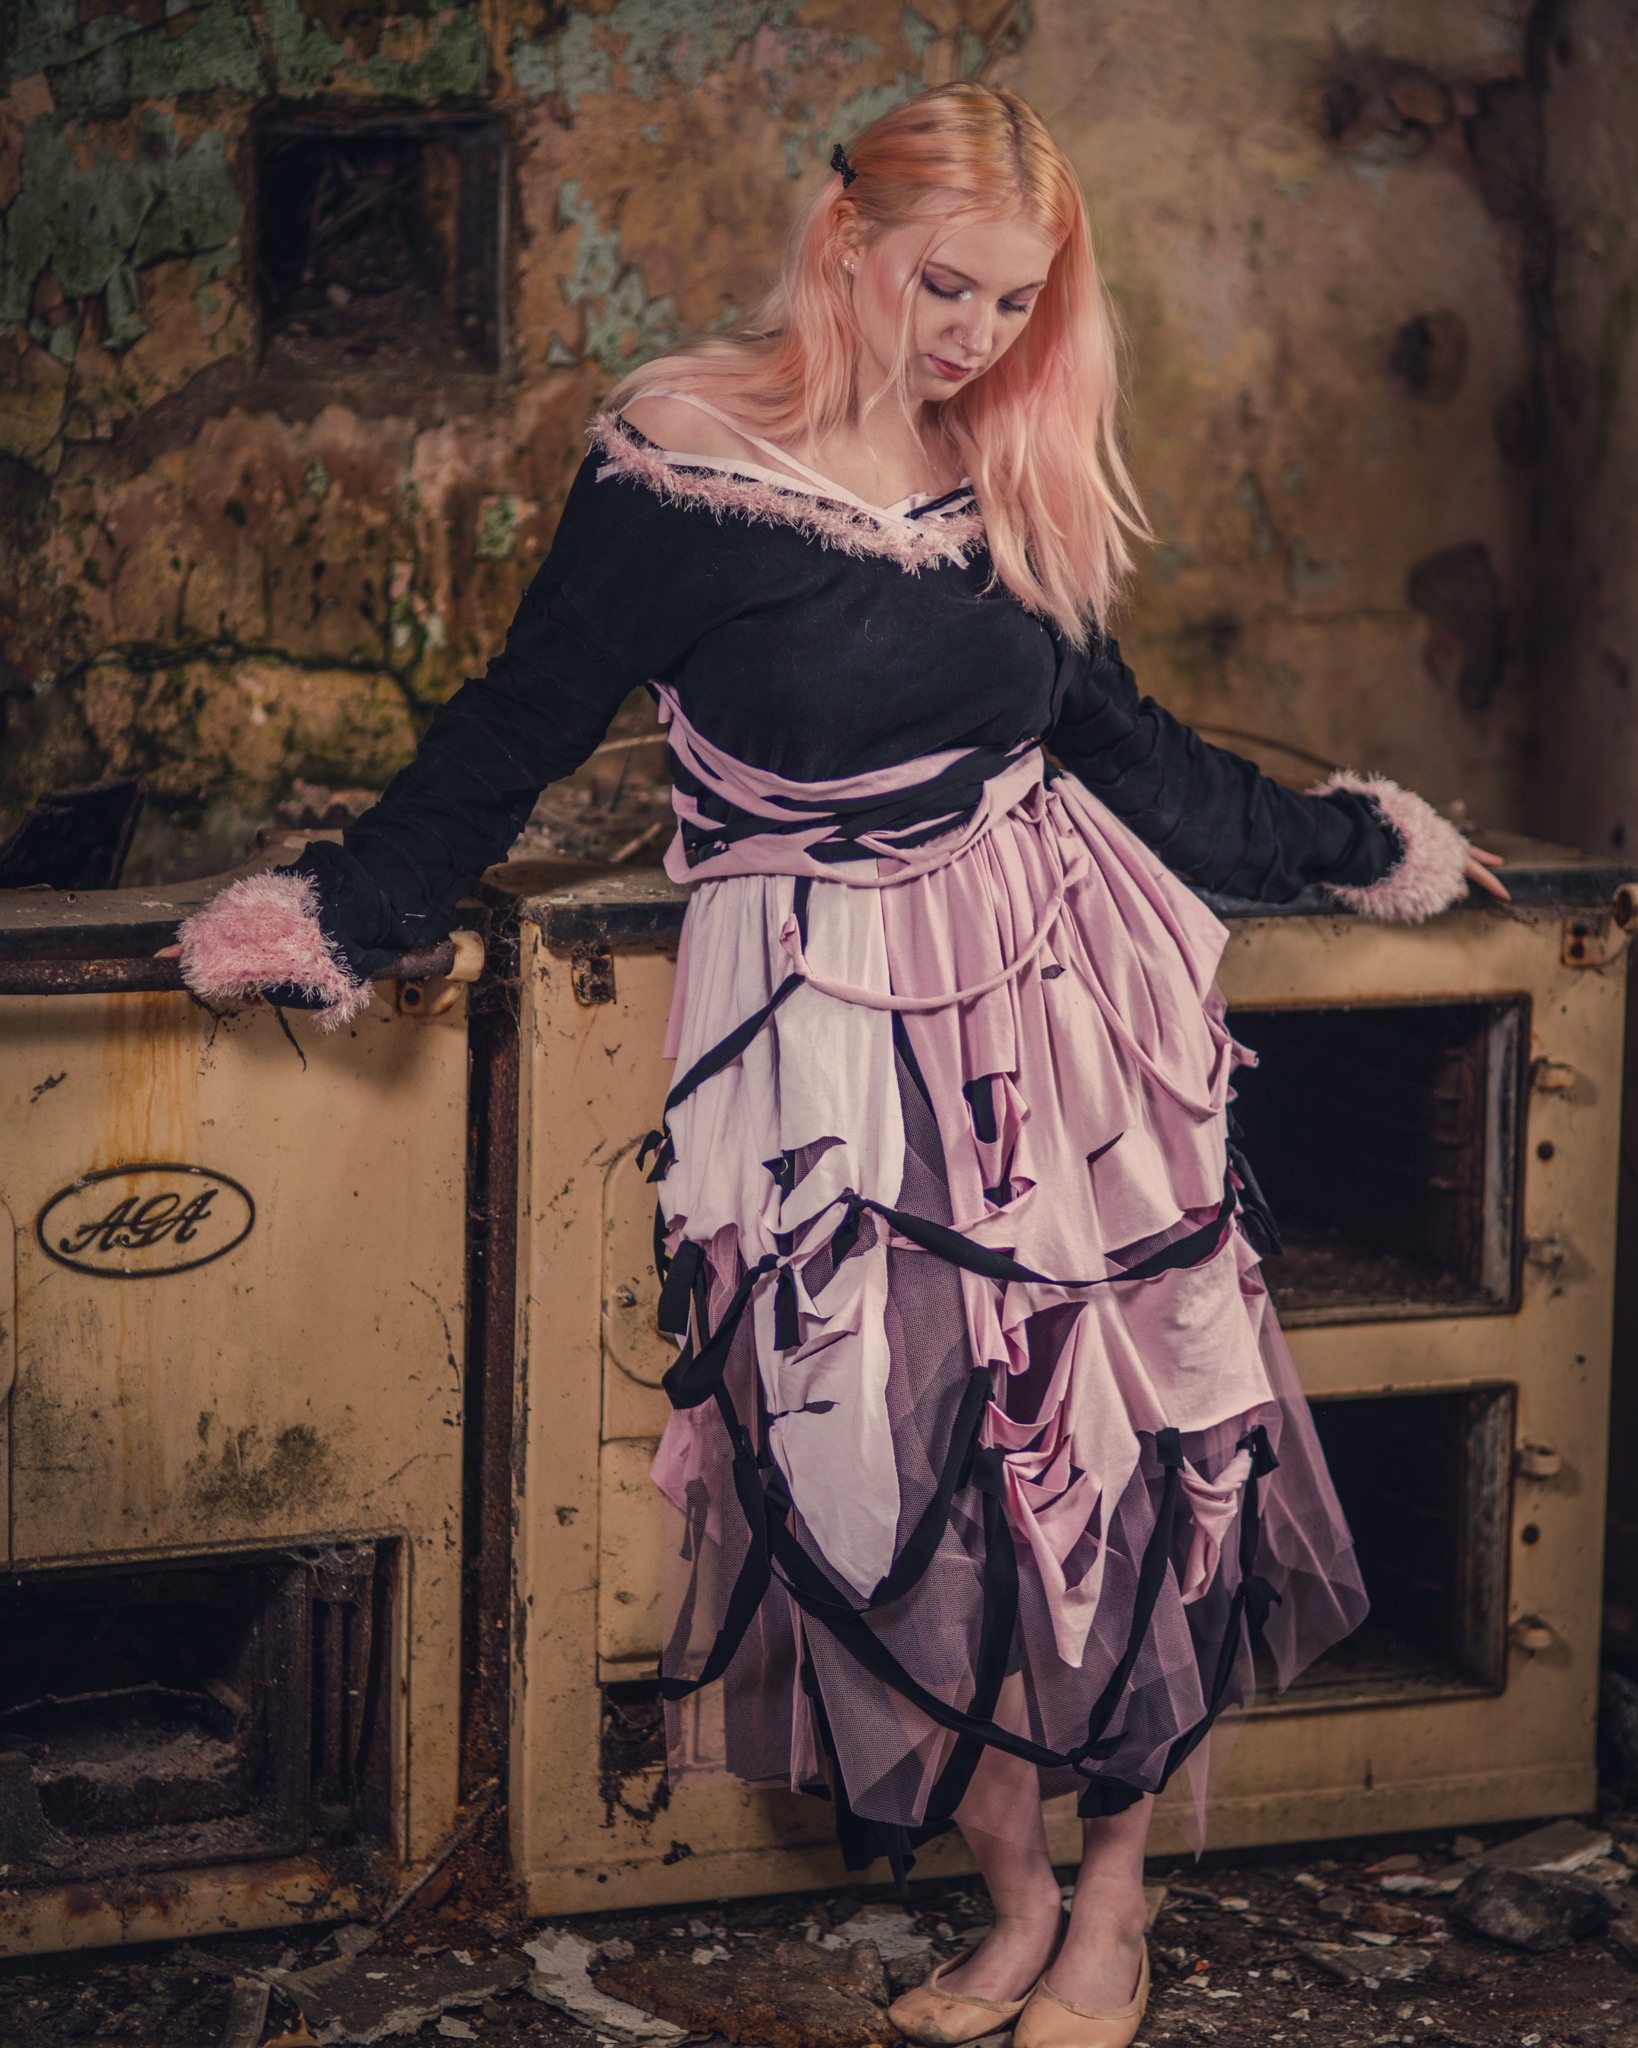 Pink & black ragged fairy dress - Threads of a Fairytale